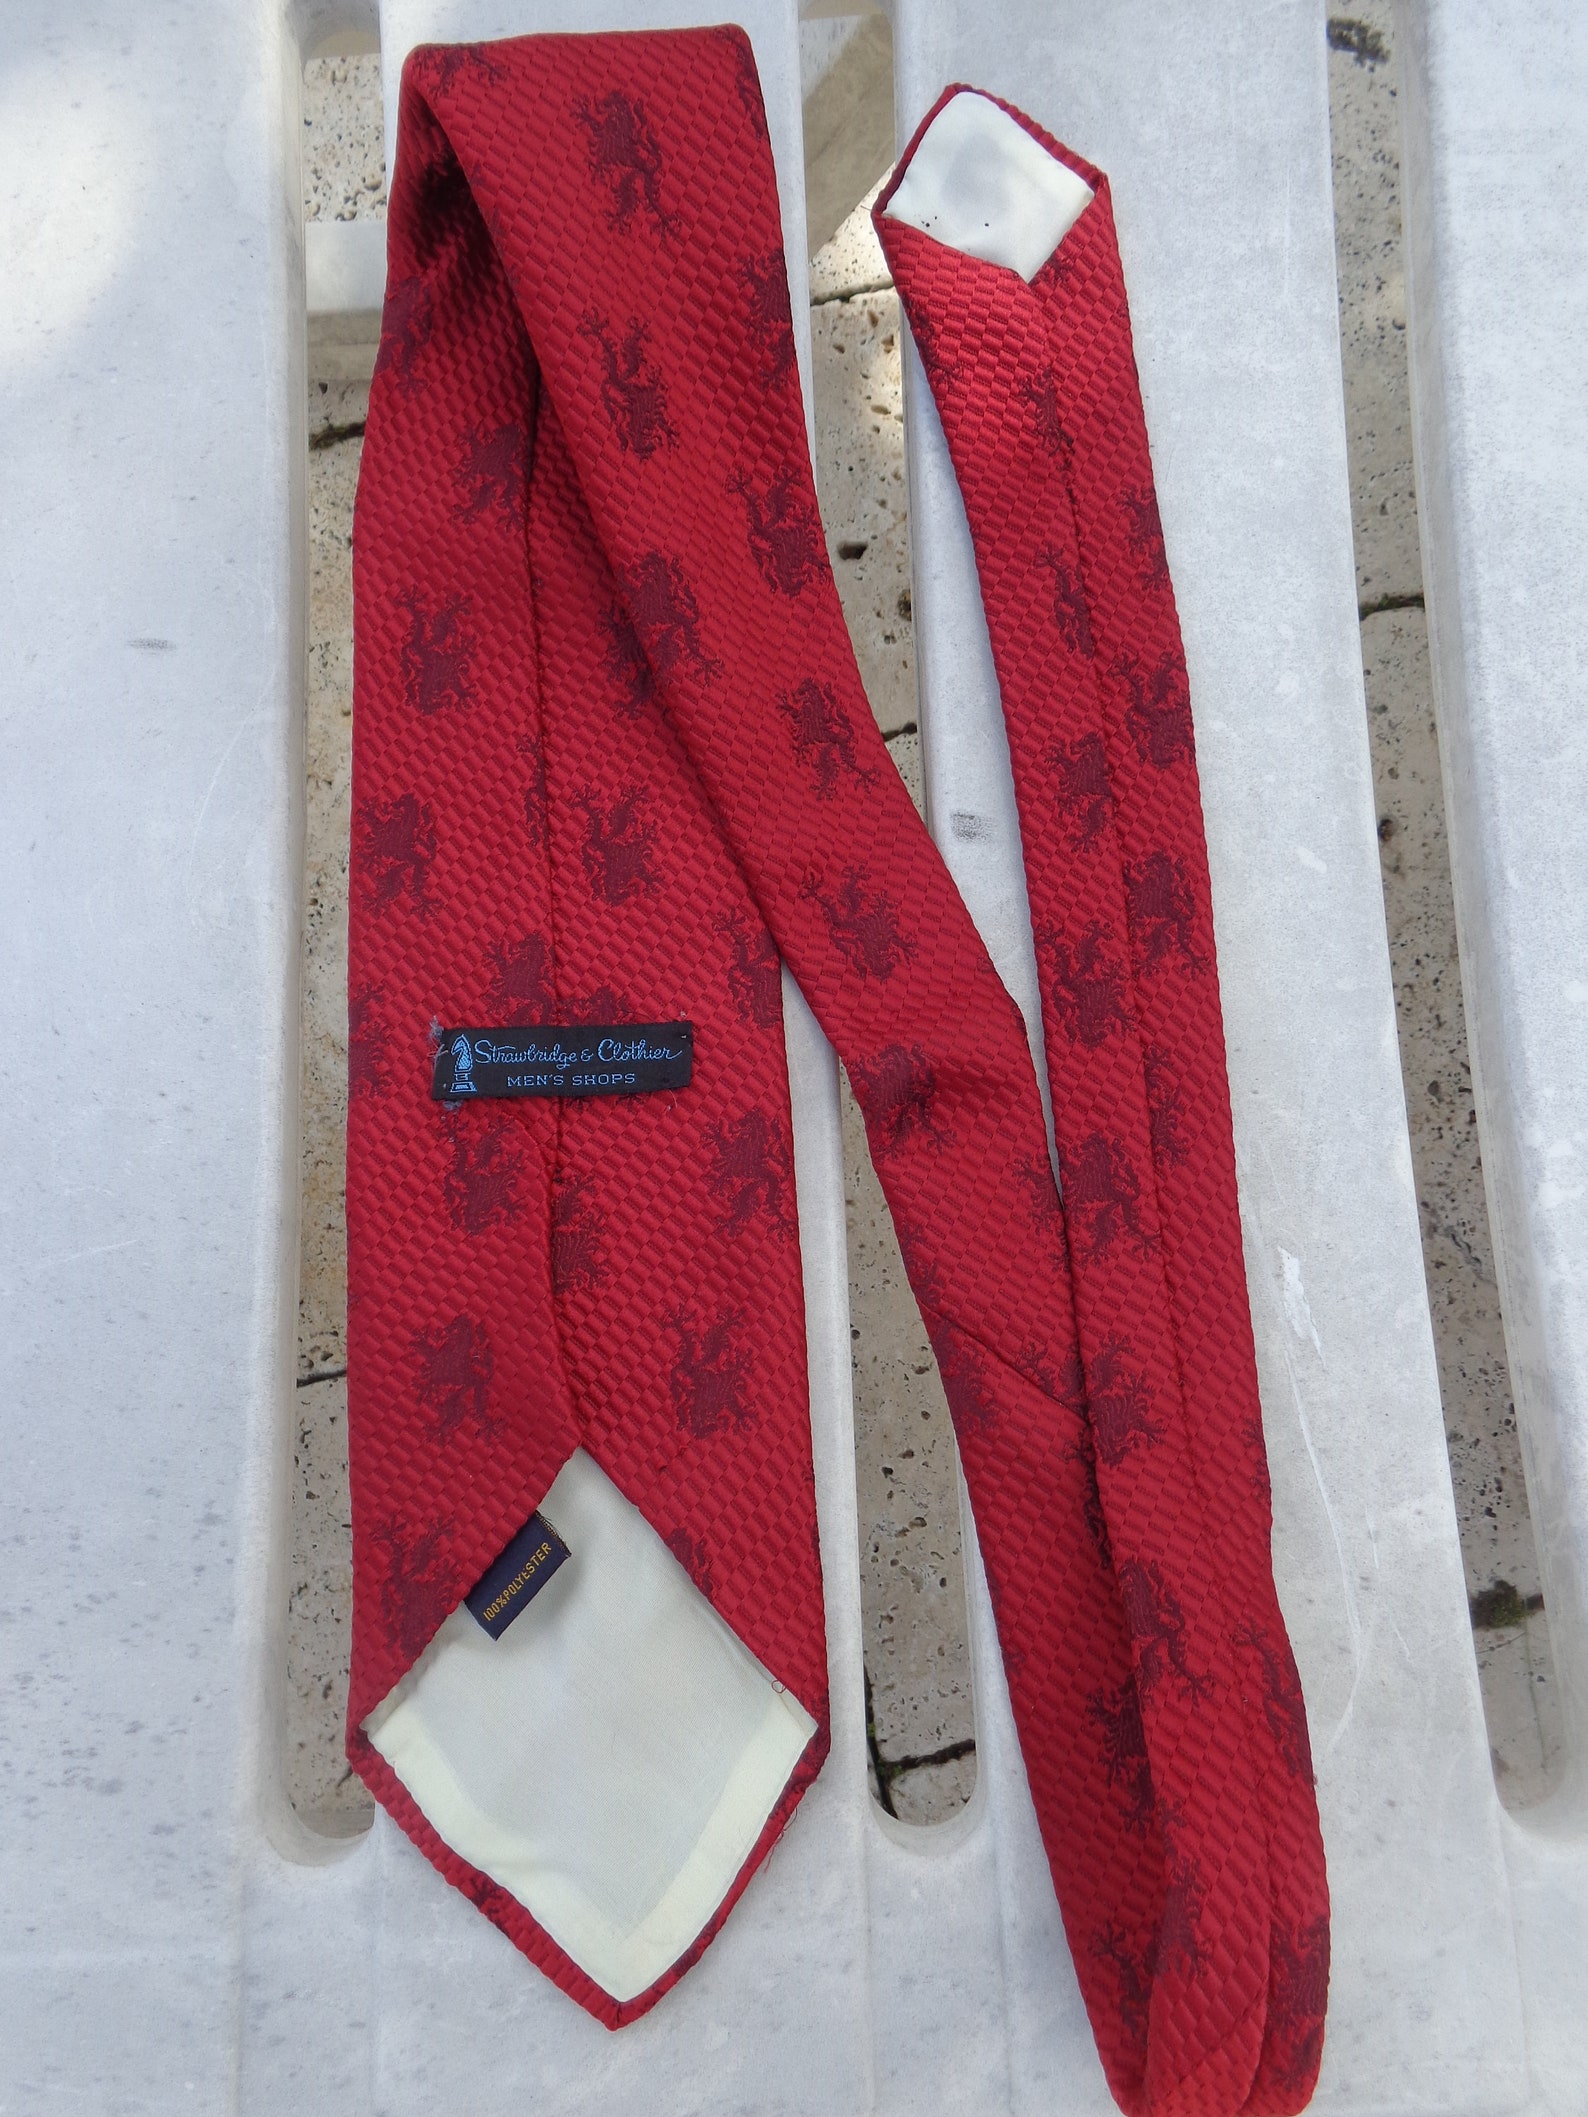 Strawbridge & Clothier Red Embossed Necktie | Etsy